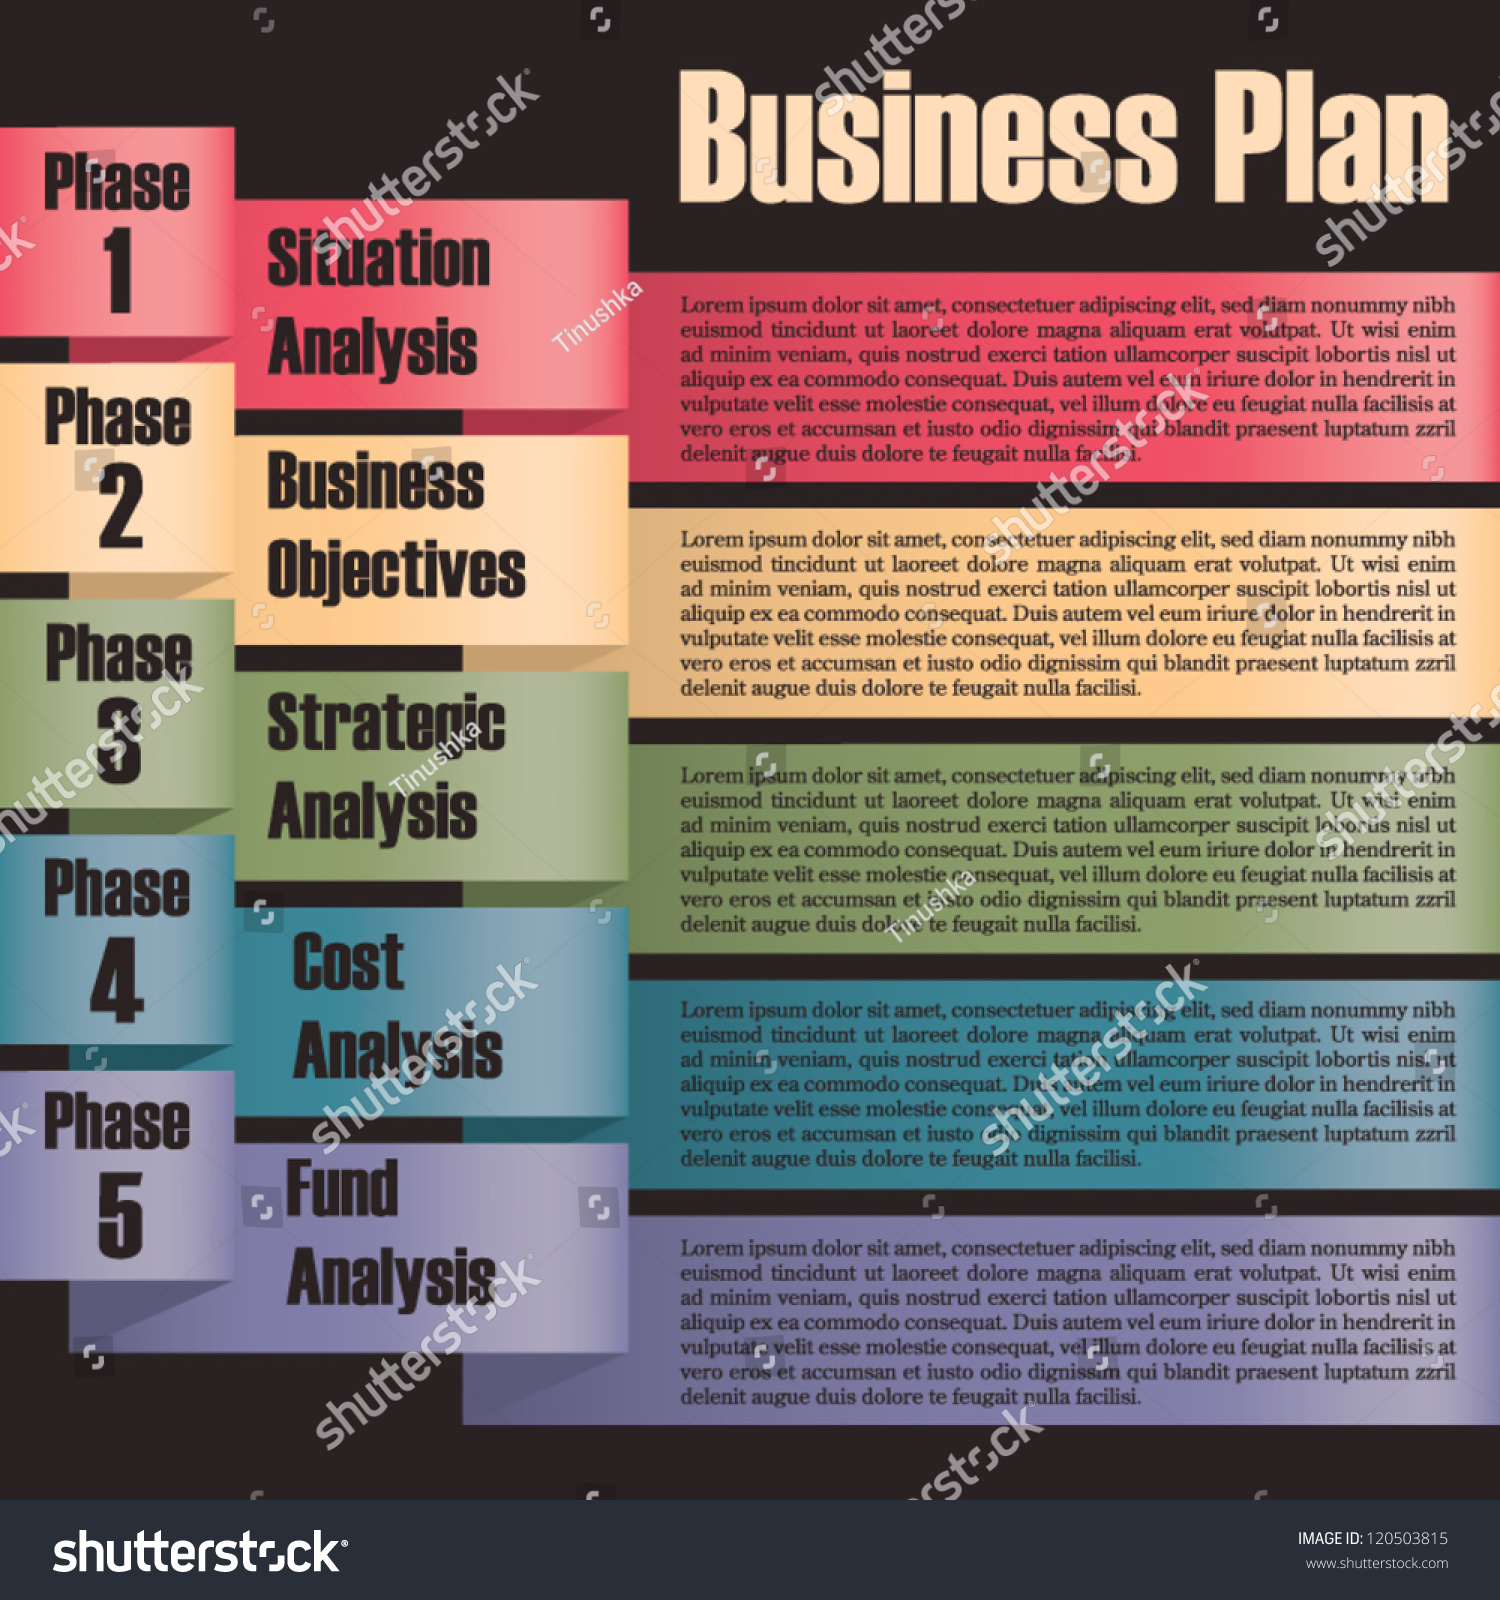 Sample business plan for website